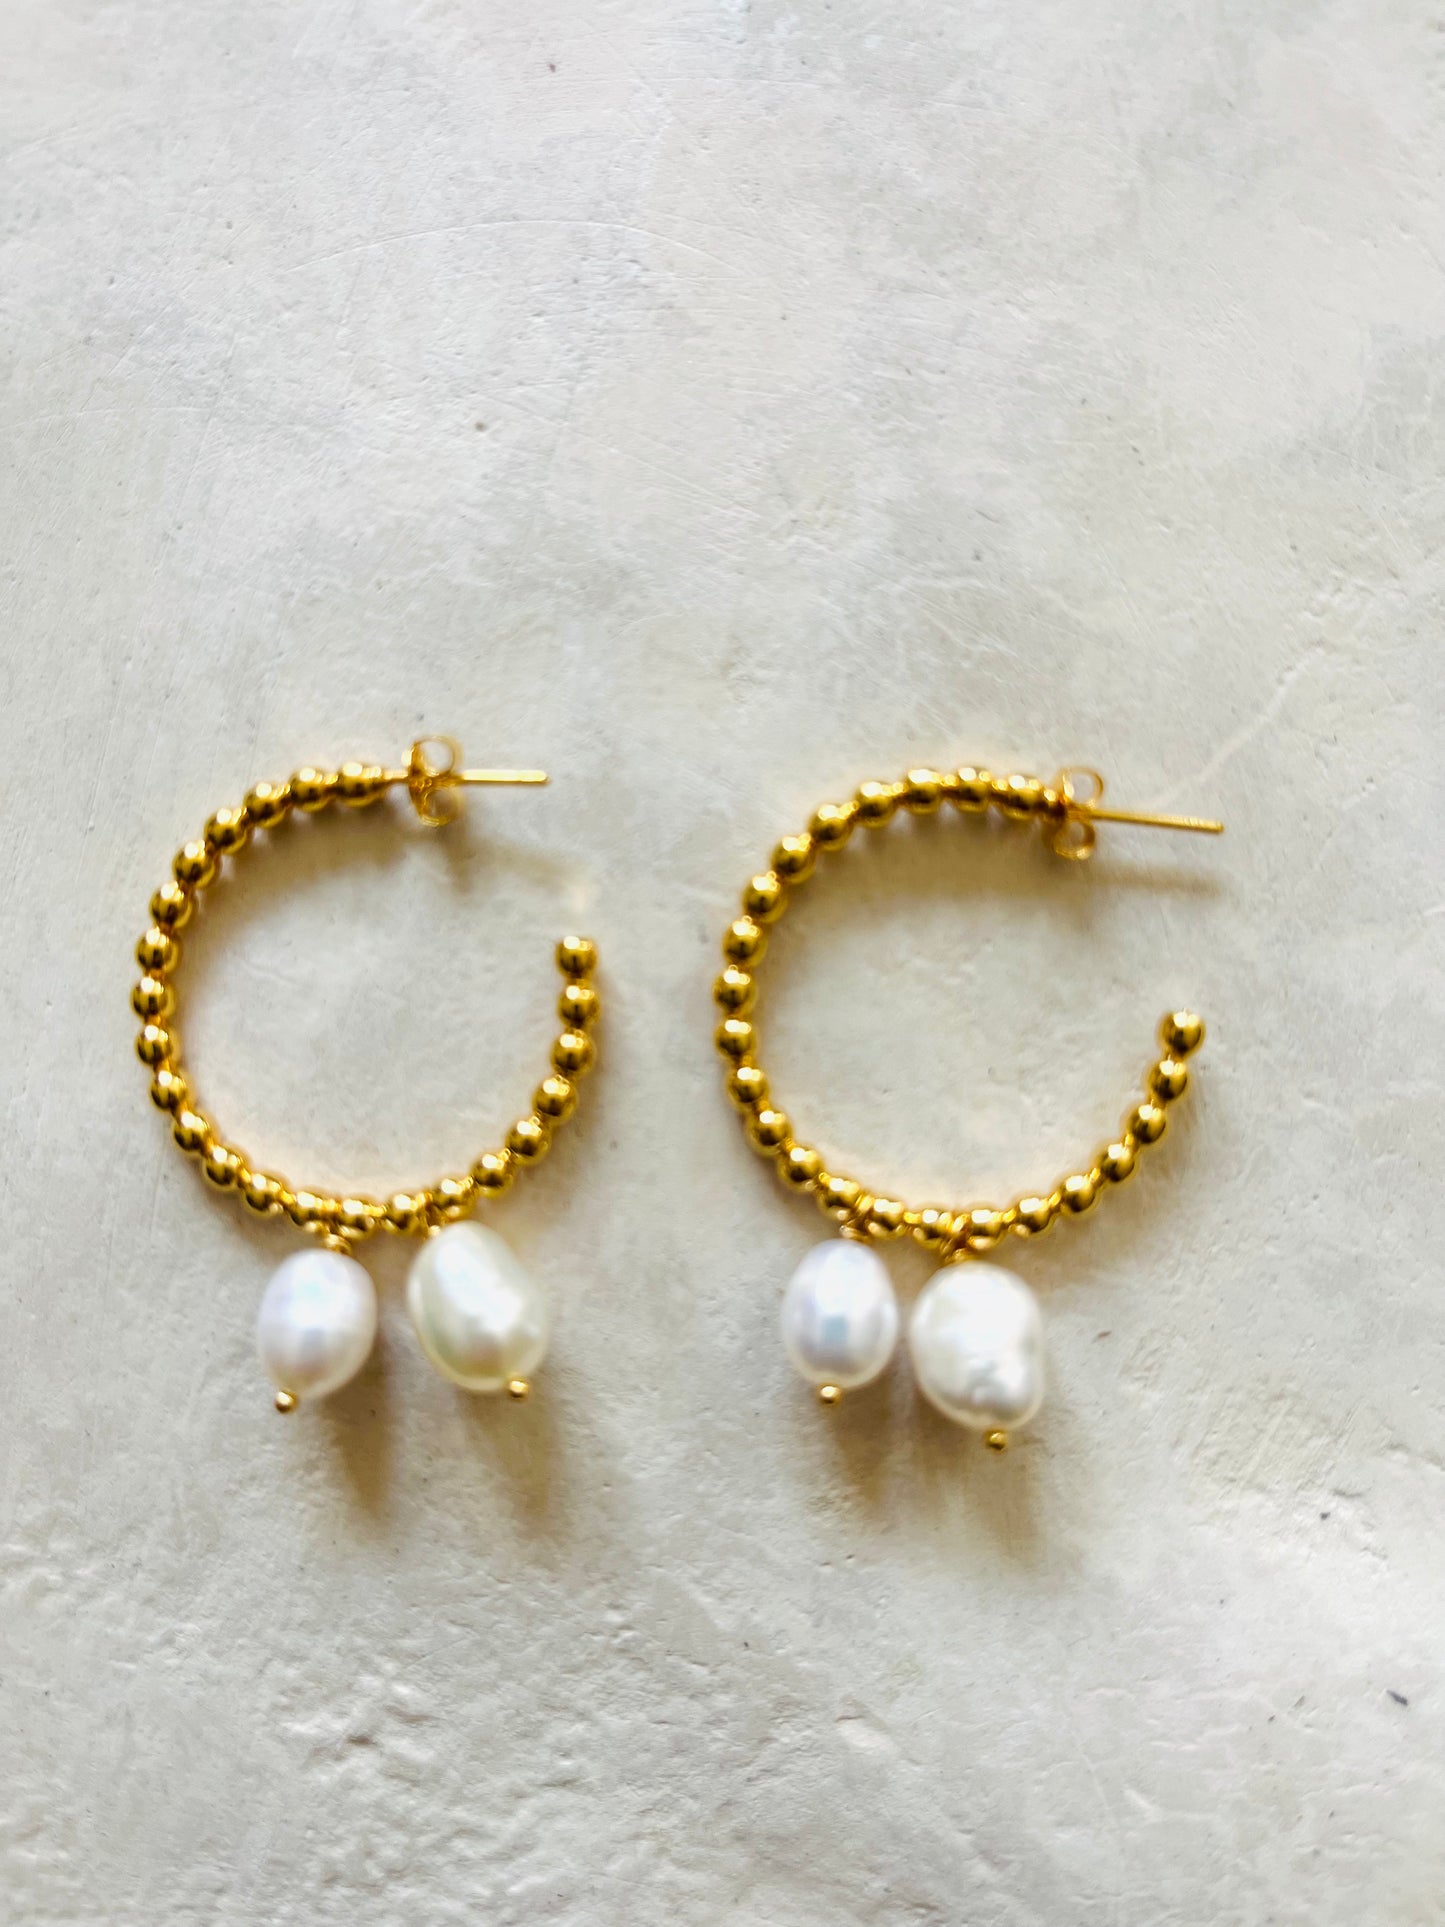 Pearls pearls